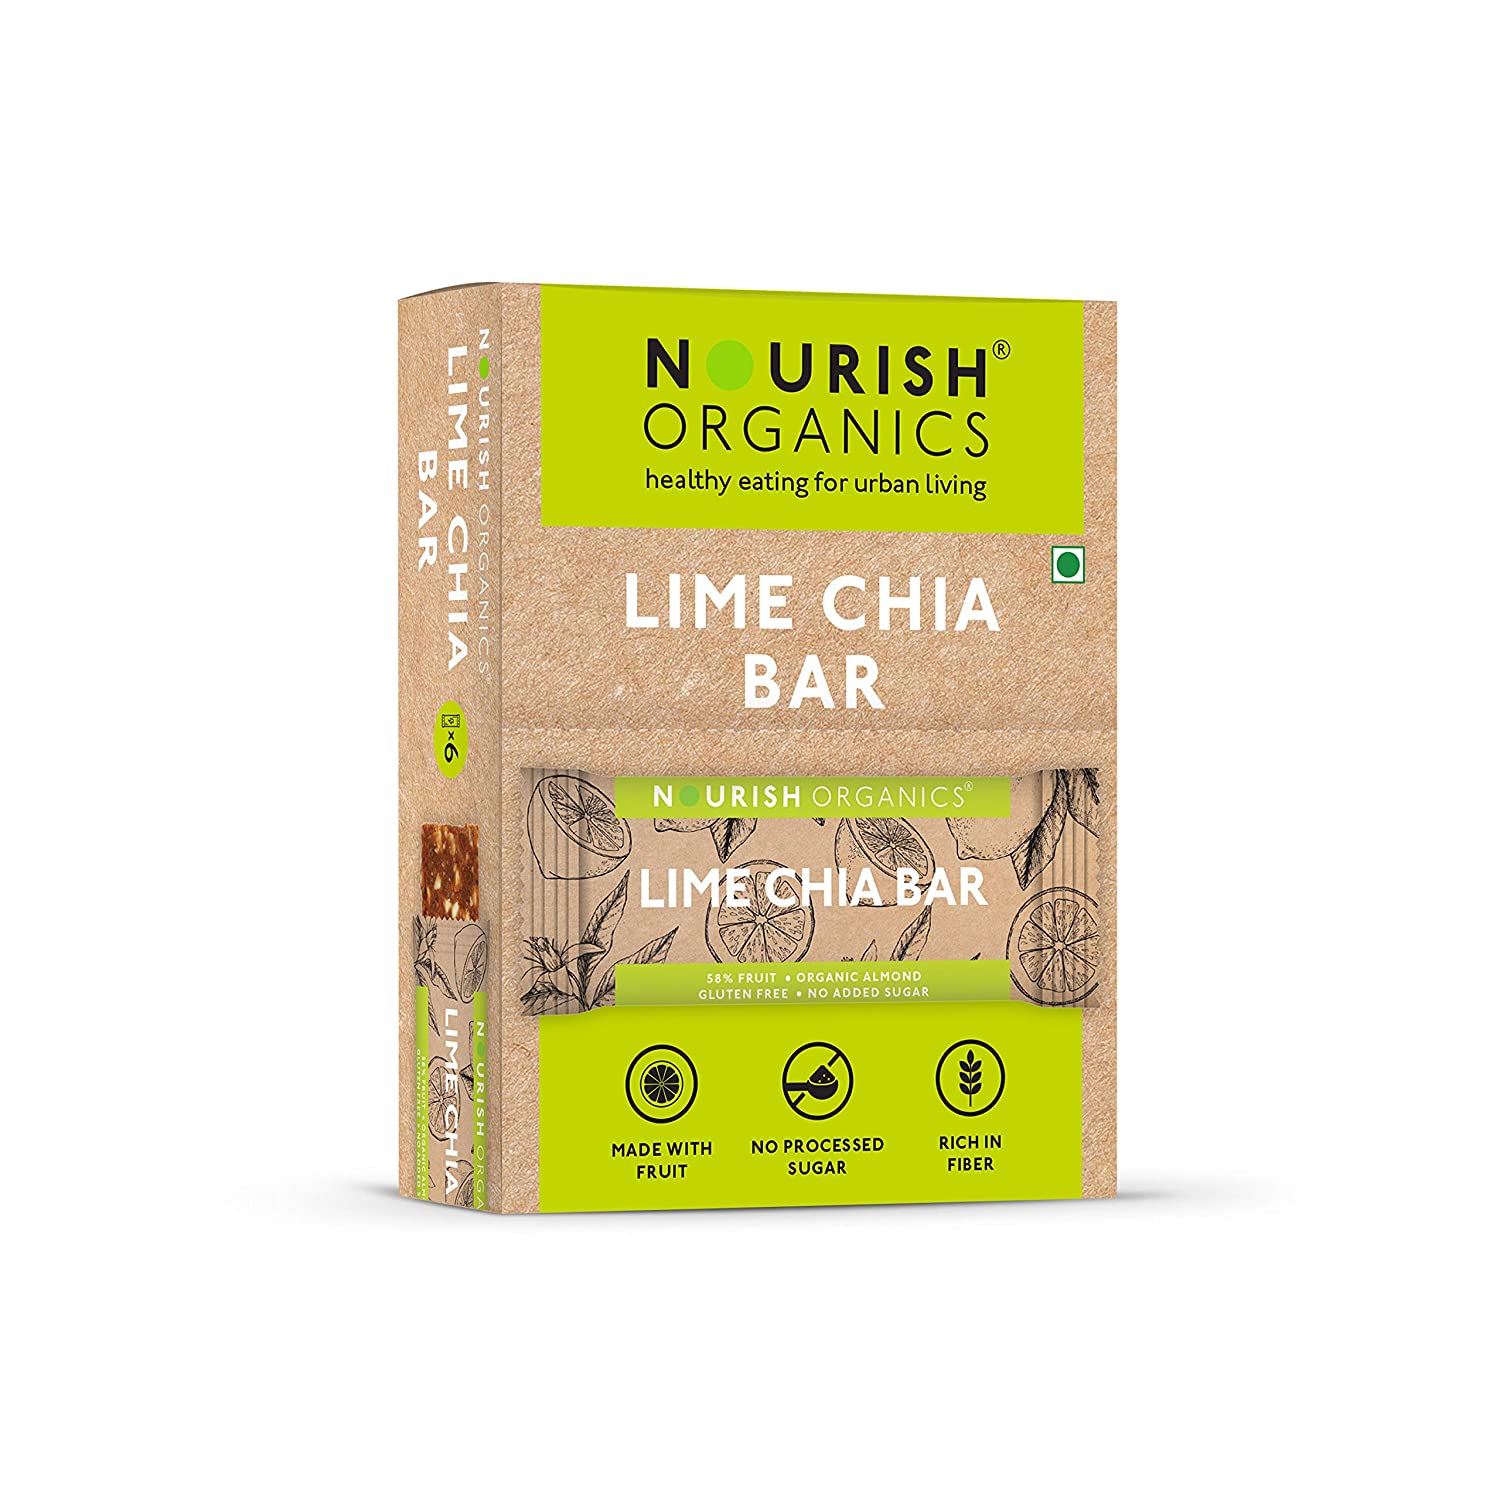 Nourish Organic Lime Chia Bar Image